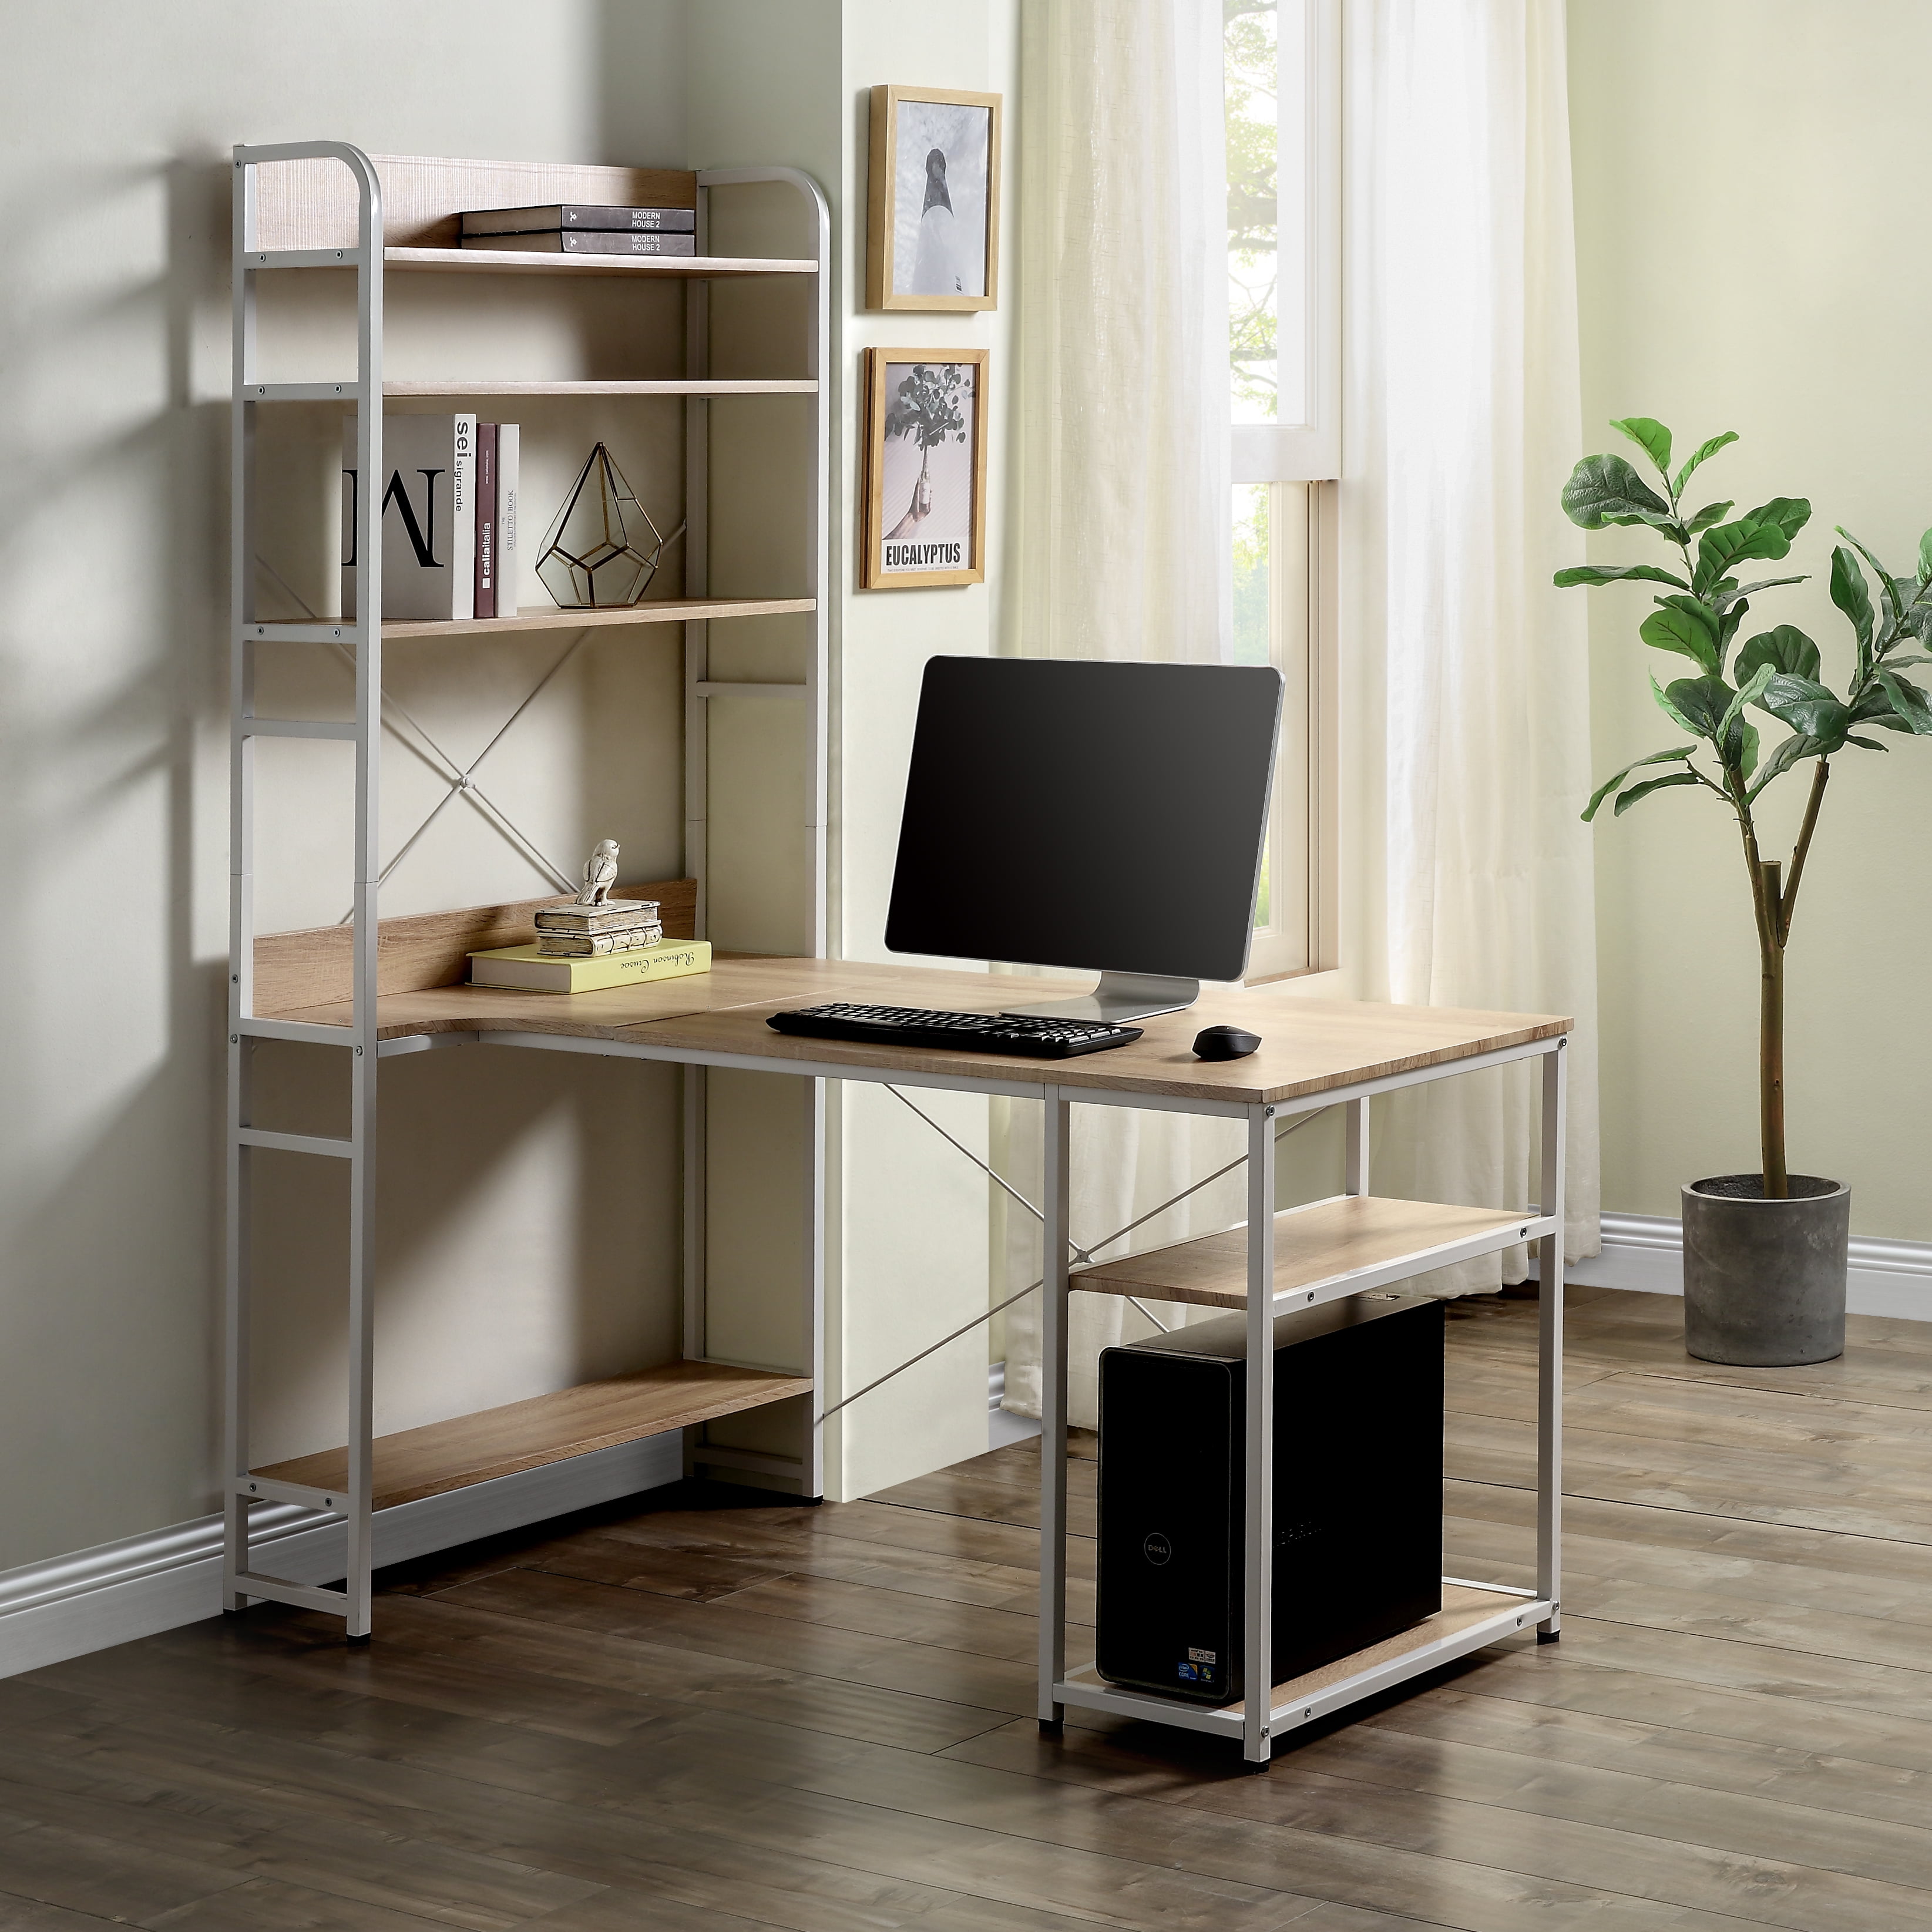 Details about   L-Shaped Corner Computer Desk PC Study Table Workstation Home Office w/Shelves+ 